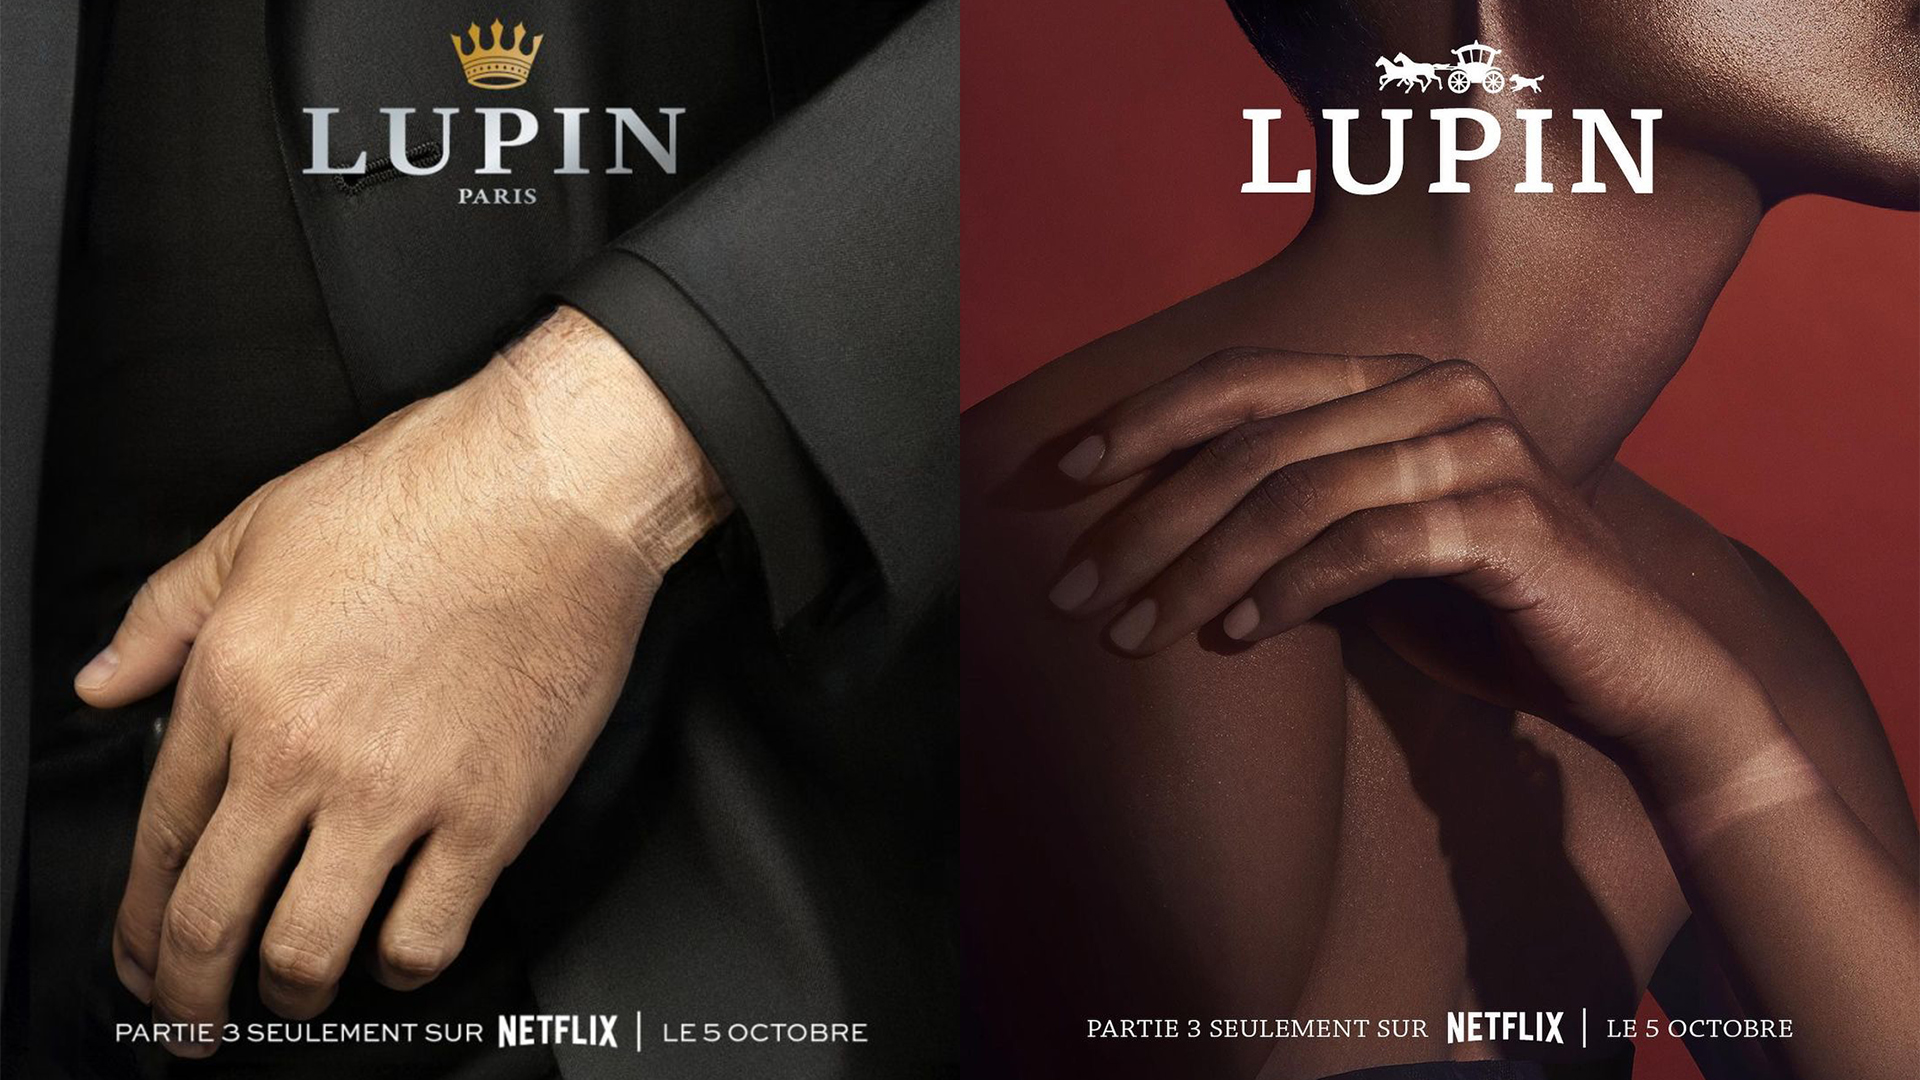 Lupin: News & Reviews